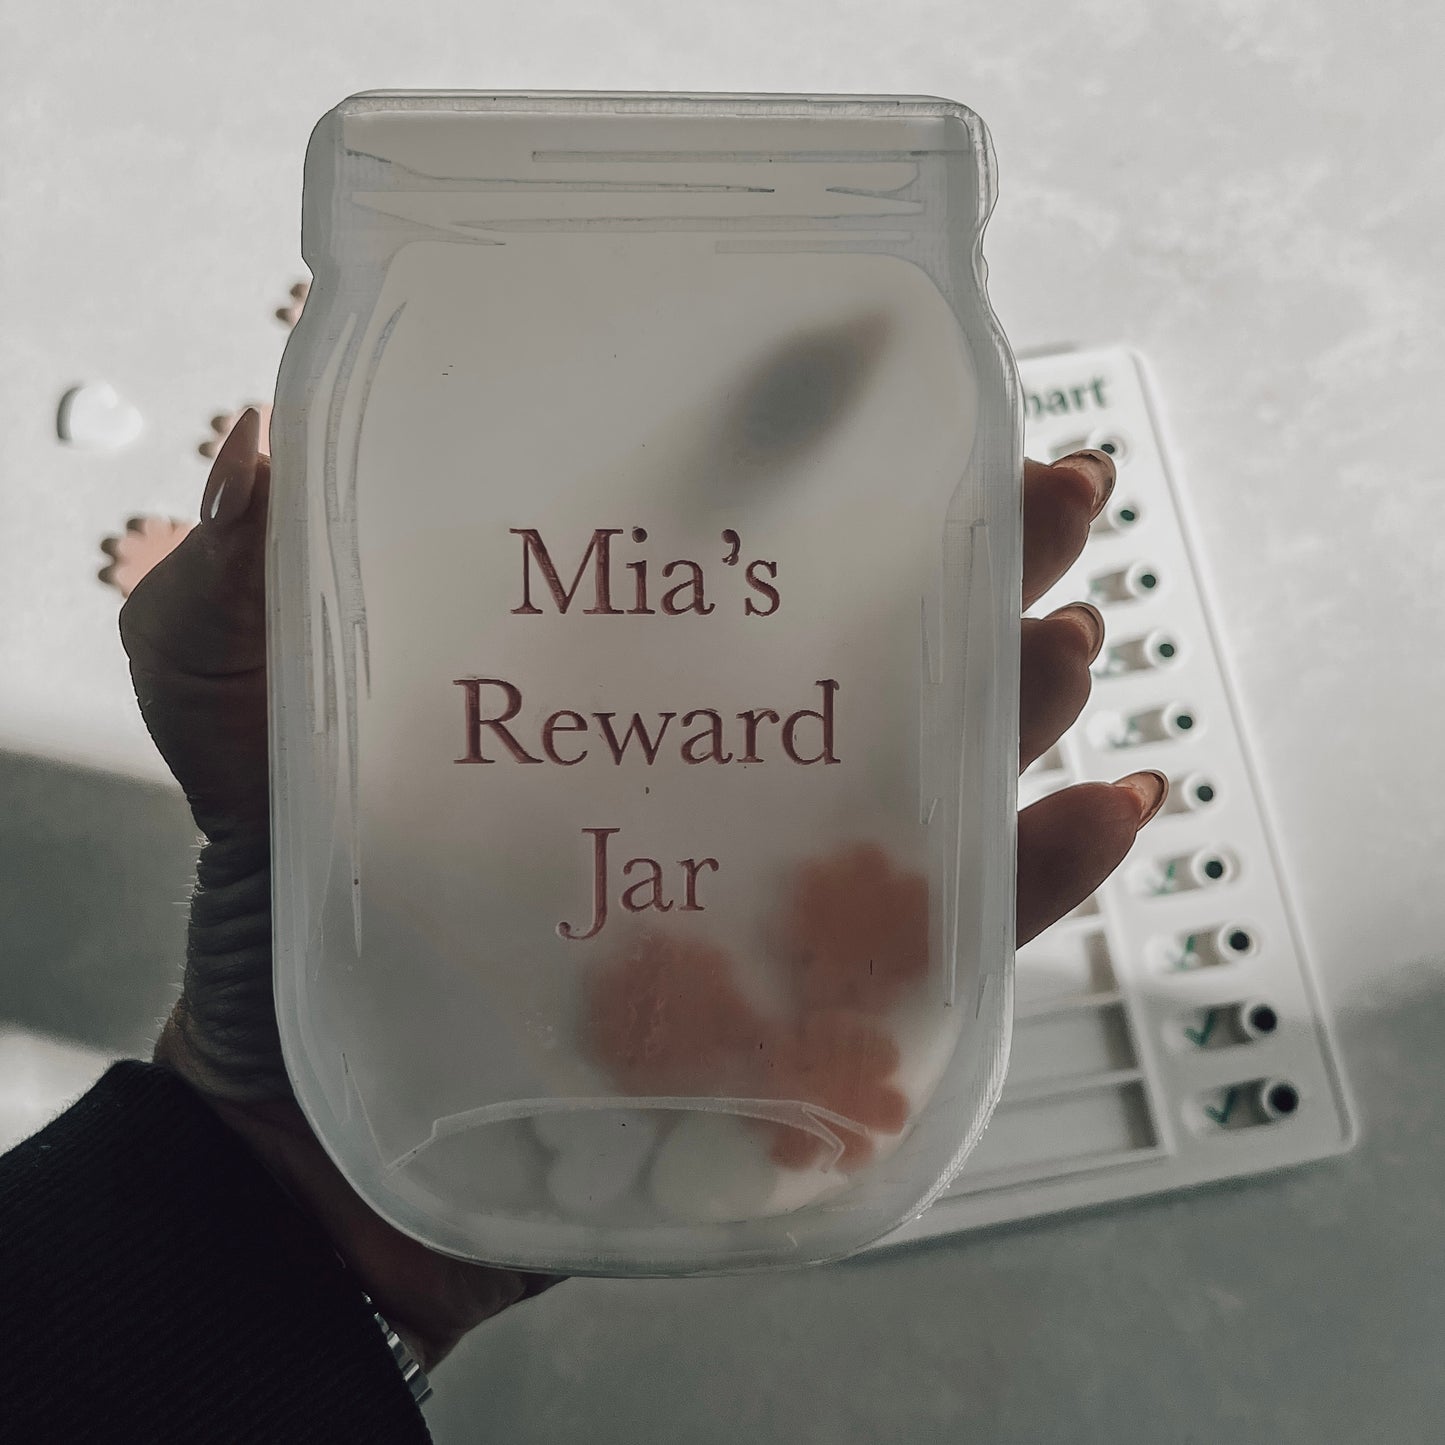 The Reward Jar